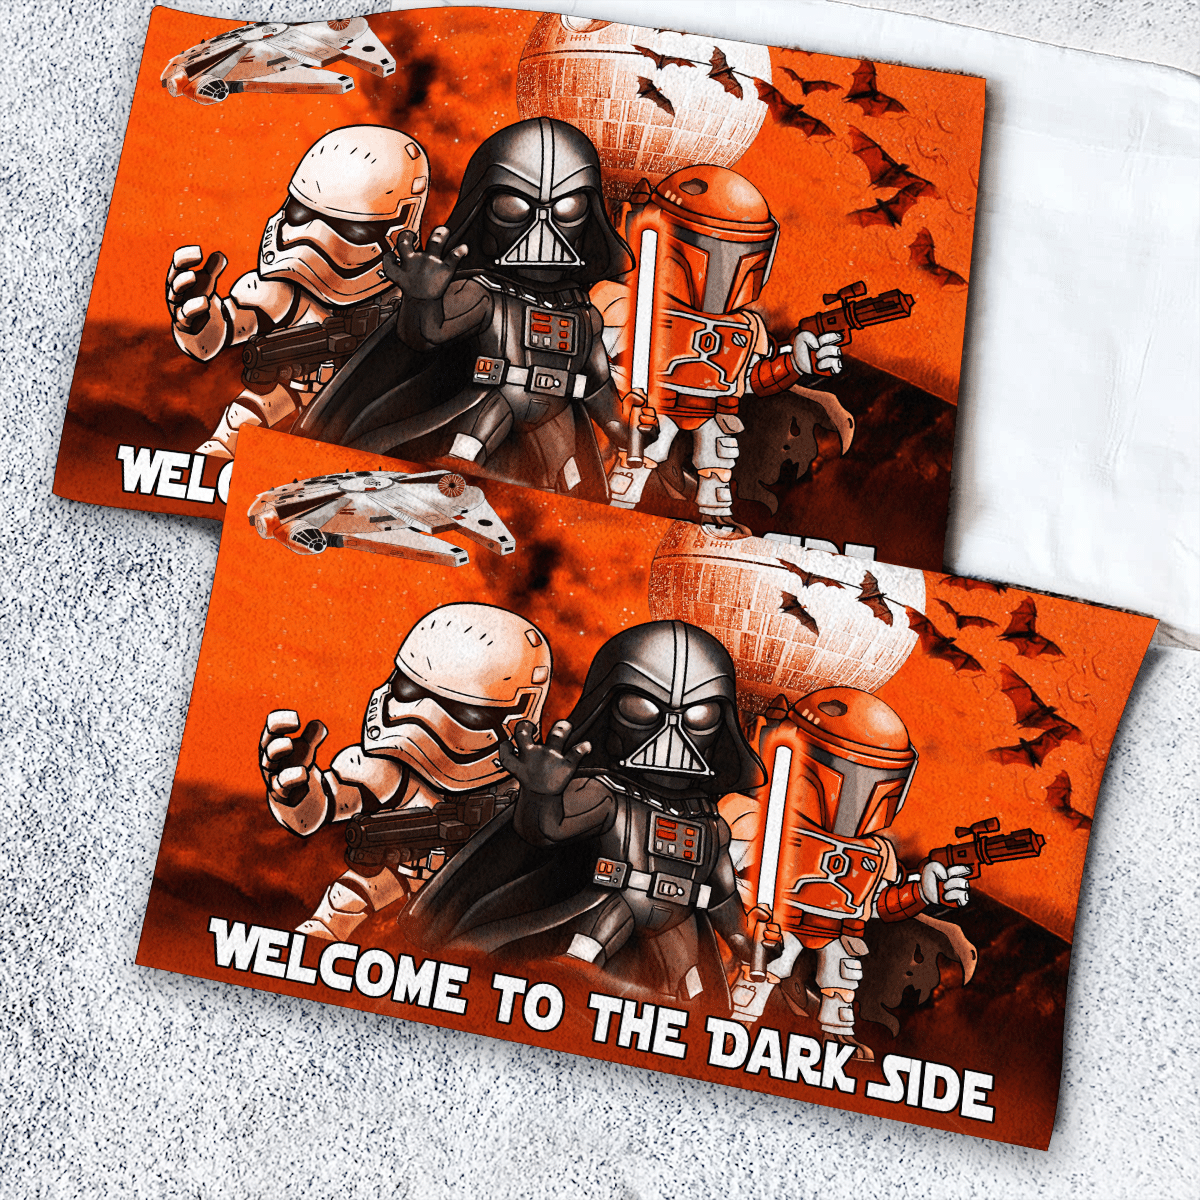 Star Wars Darth Vader Stormtrooper Boba Fett Welcome to the dark side doormat 1